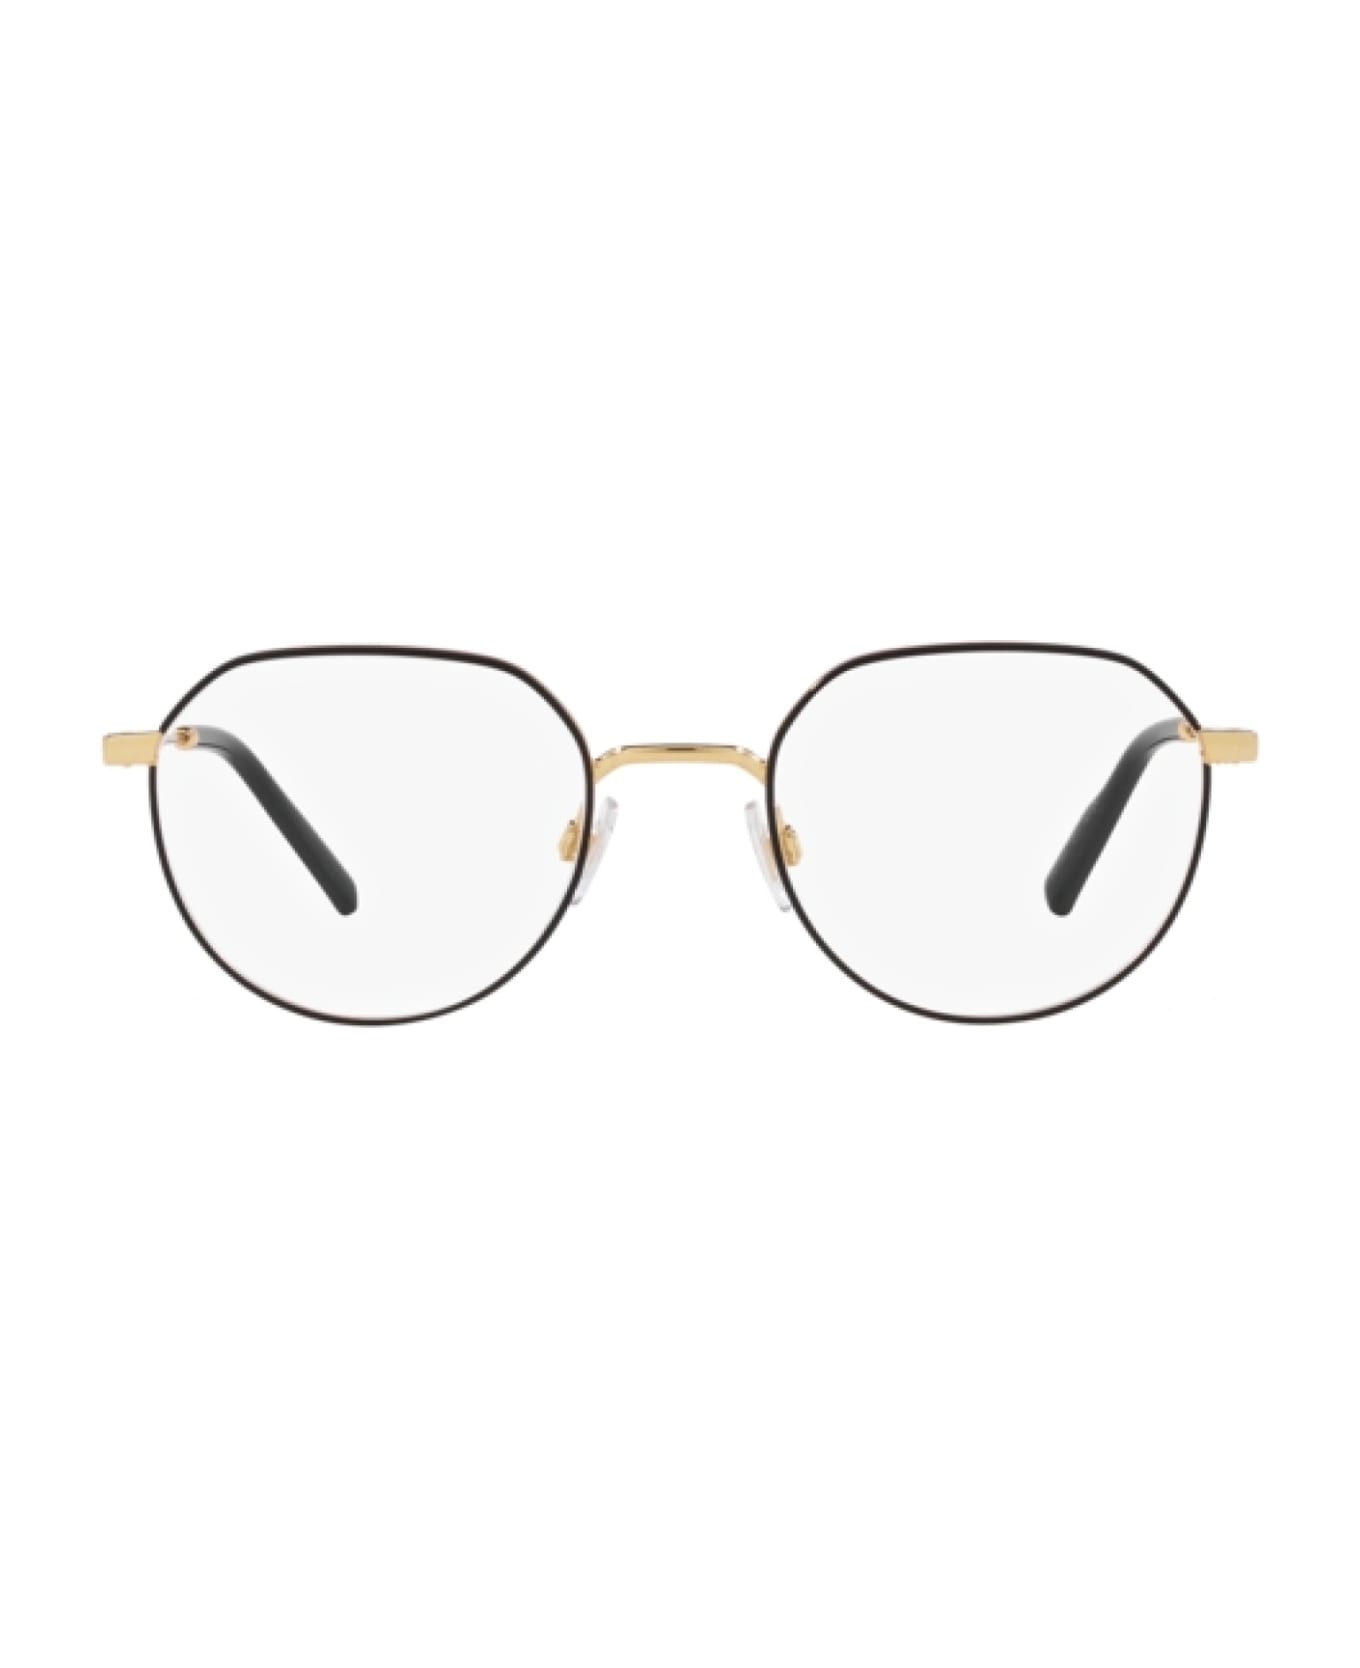 Dolce & Gabbana Eyewear DG1349 1311 Glasses - Oro e nero